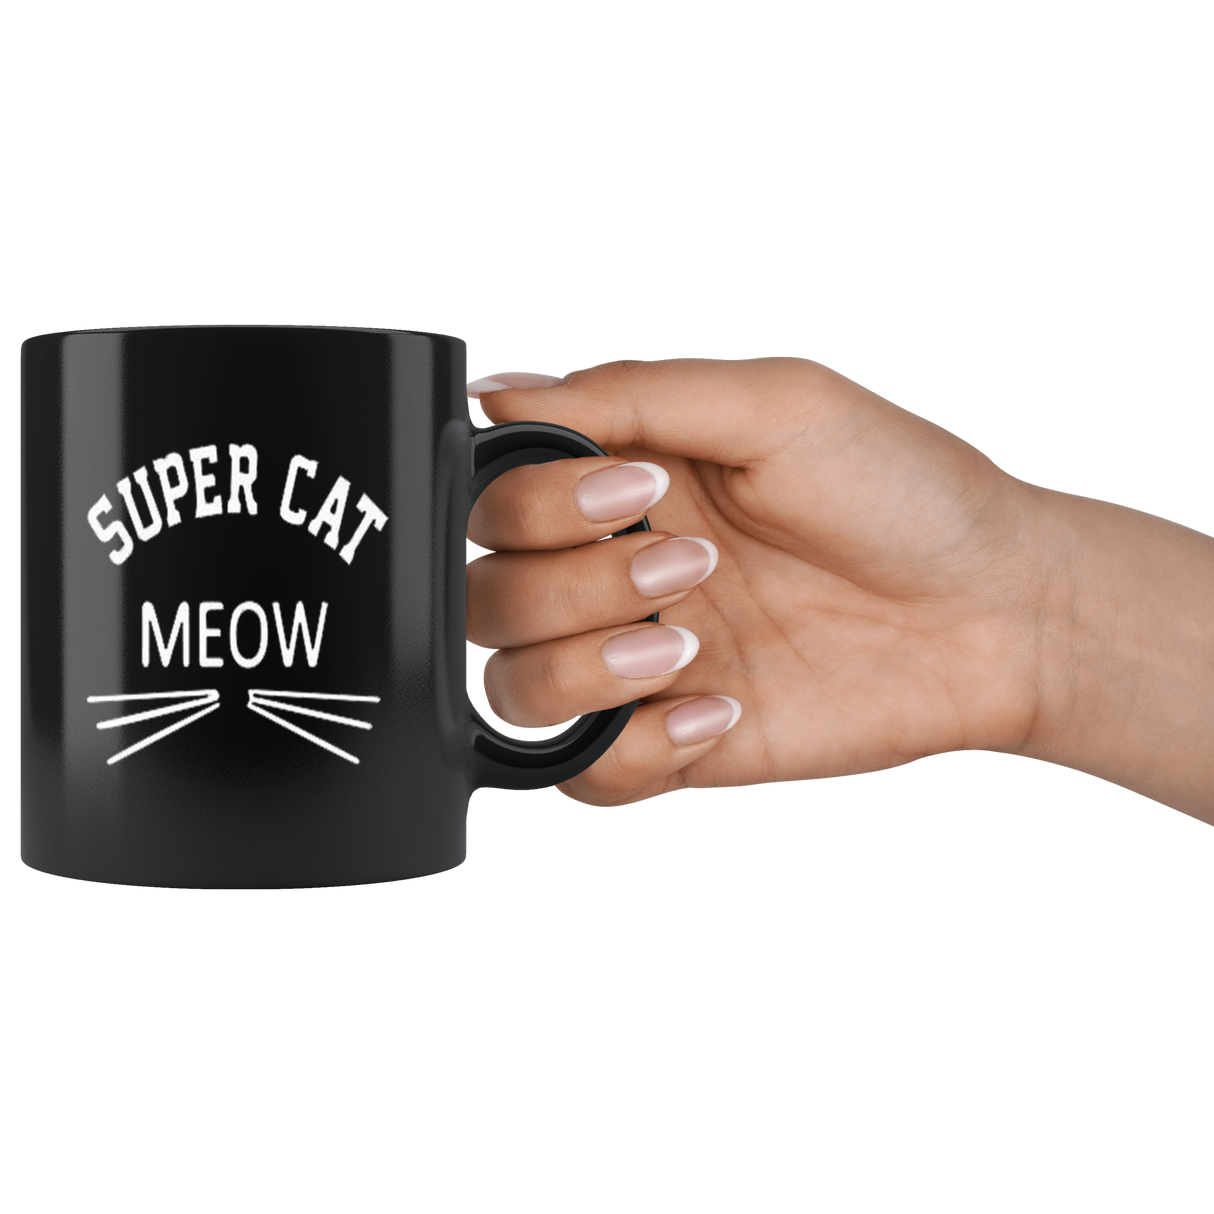 Super Cat Mugs - Shop Sassy Chick 